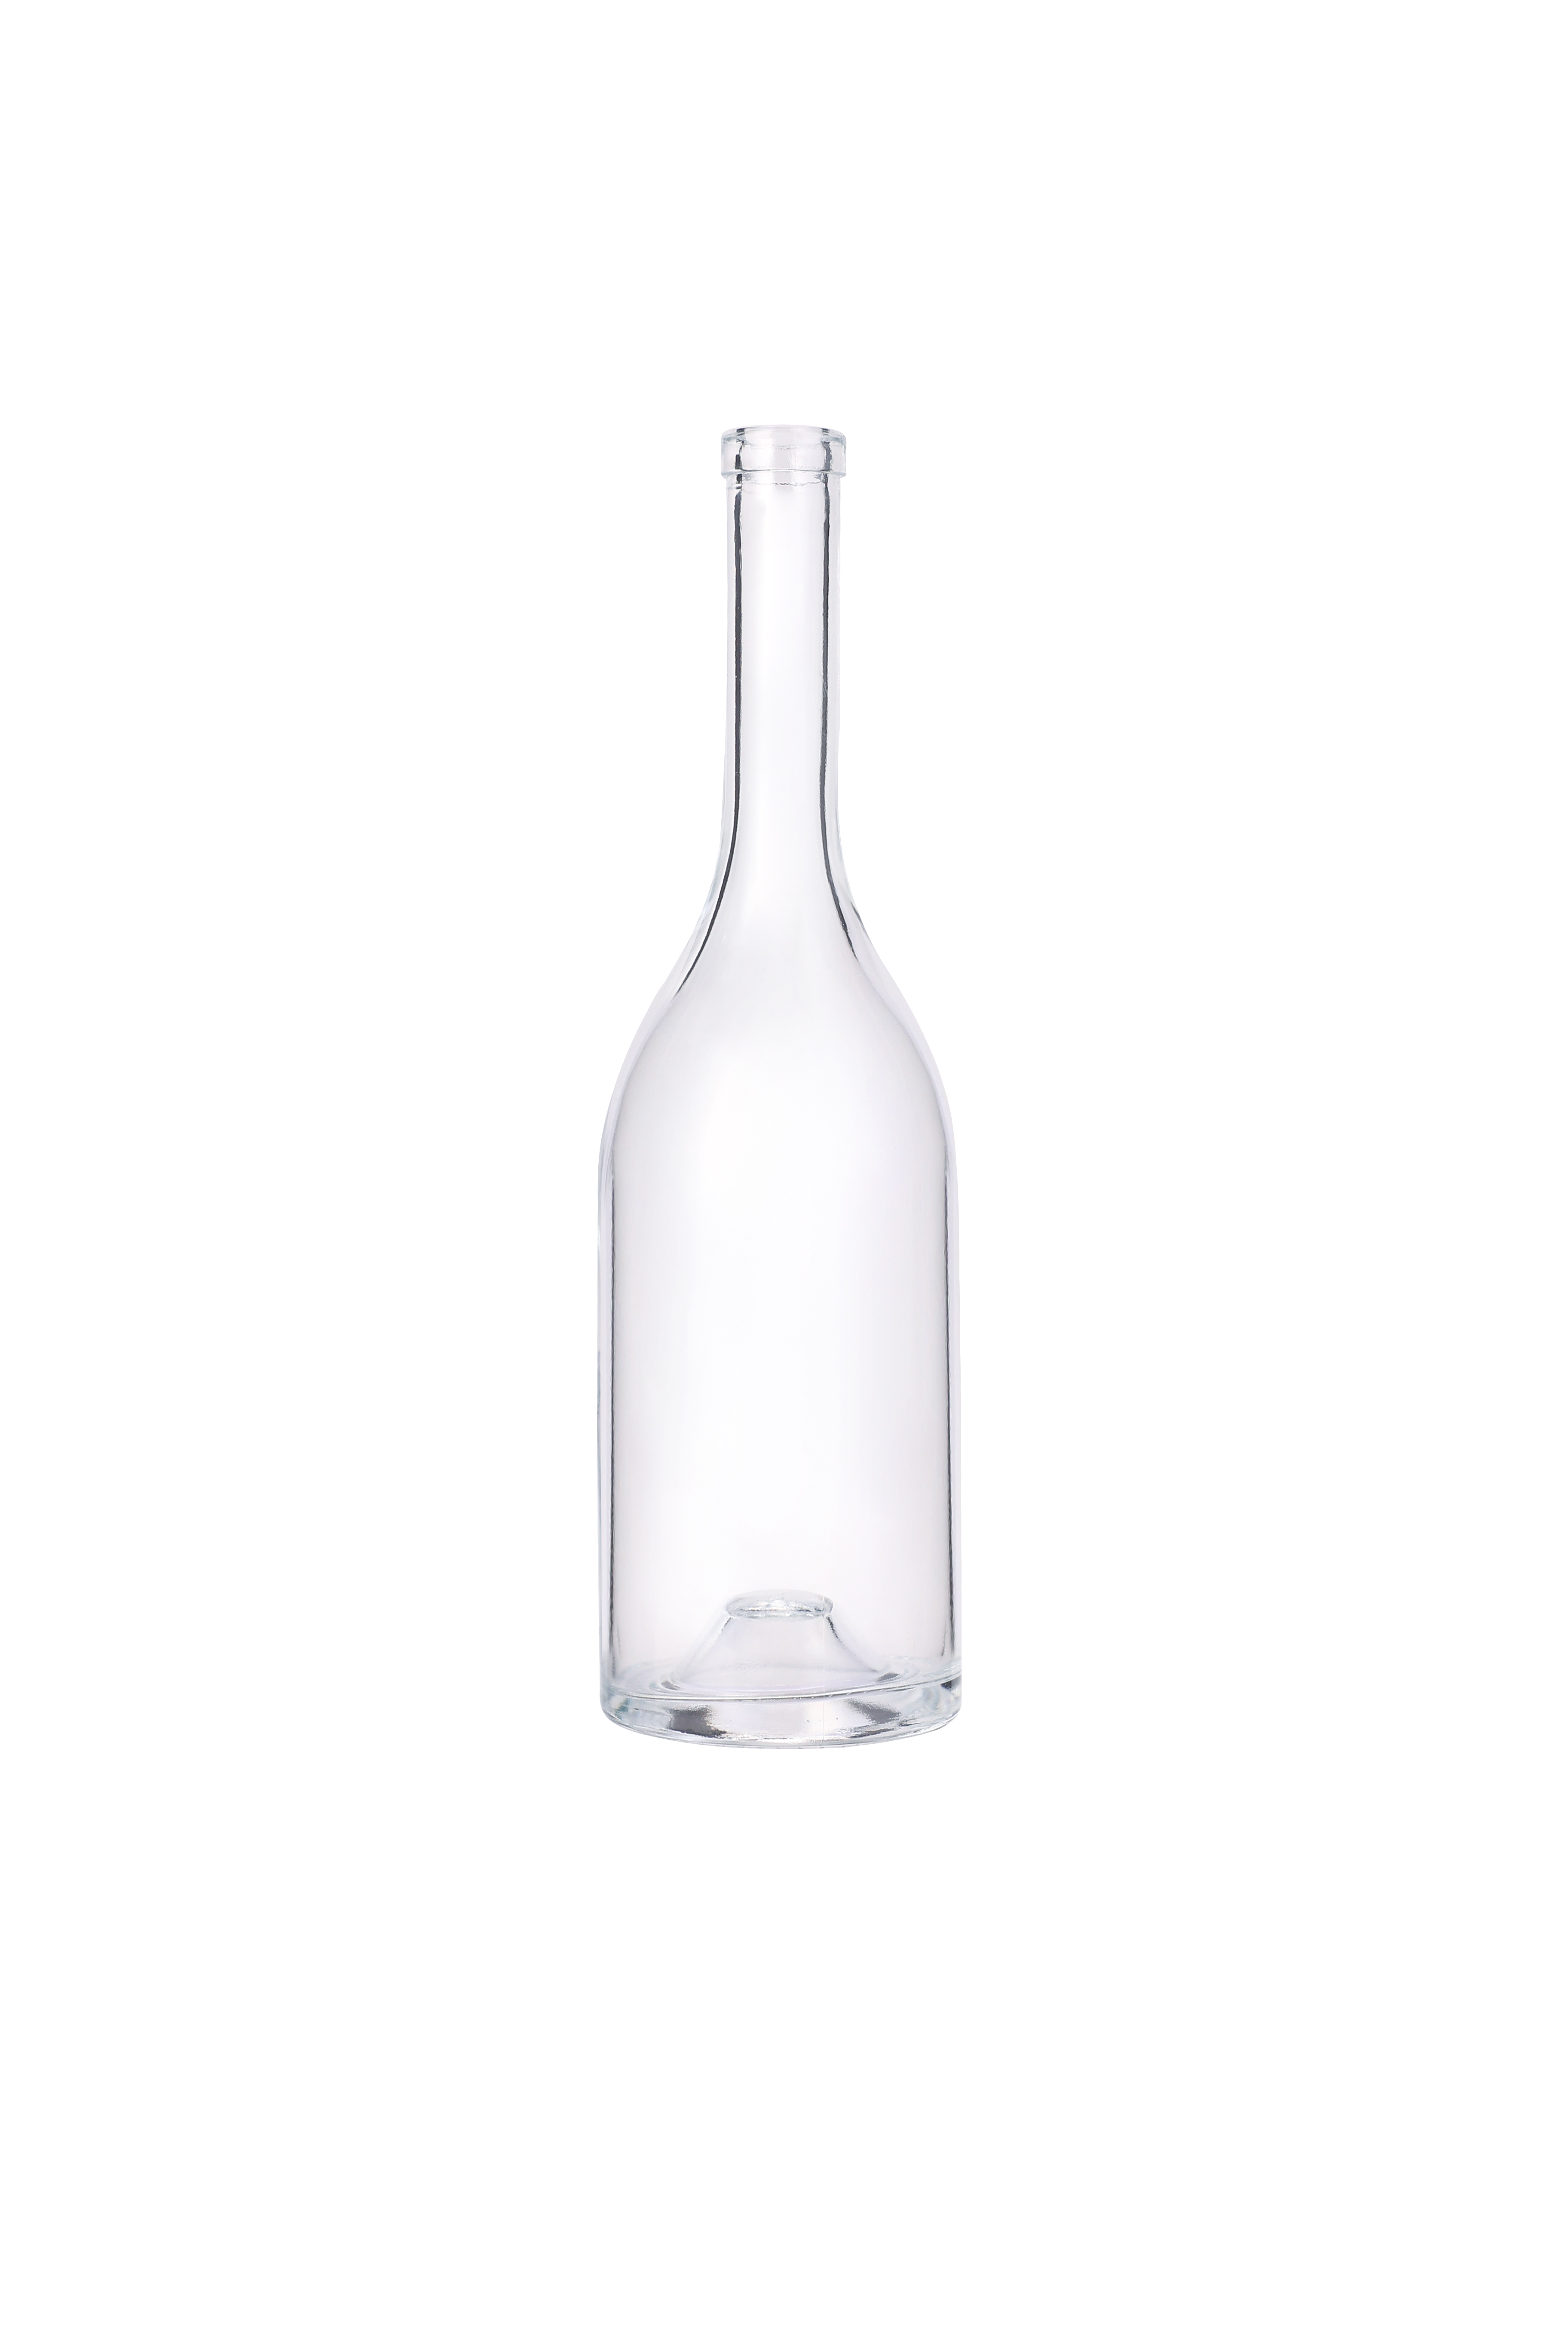 Wholesale Glass Wine Bottle White Transparent Whiskey Empty Bottle 